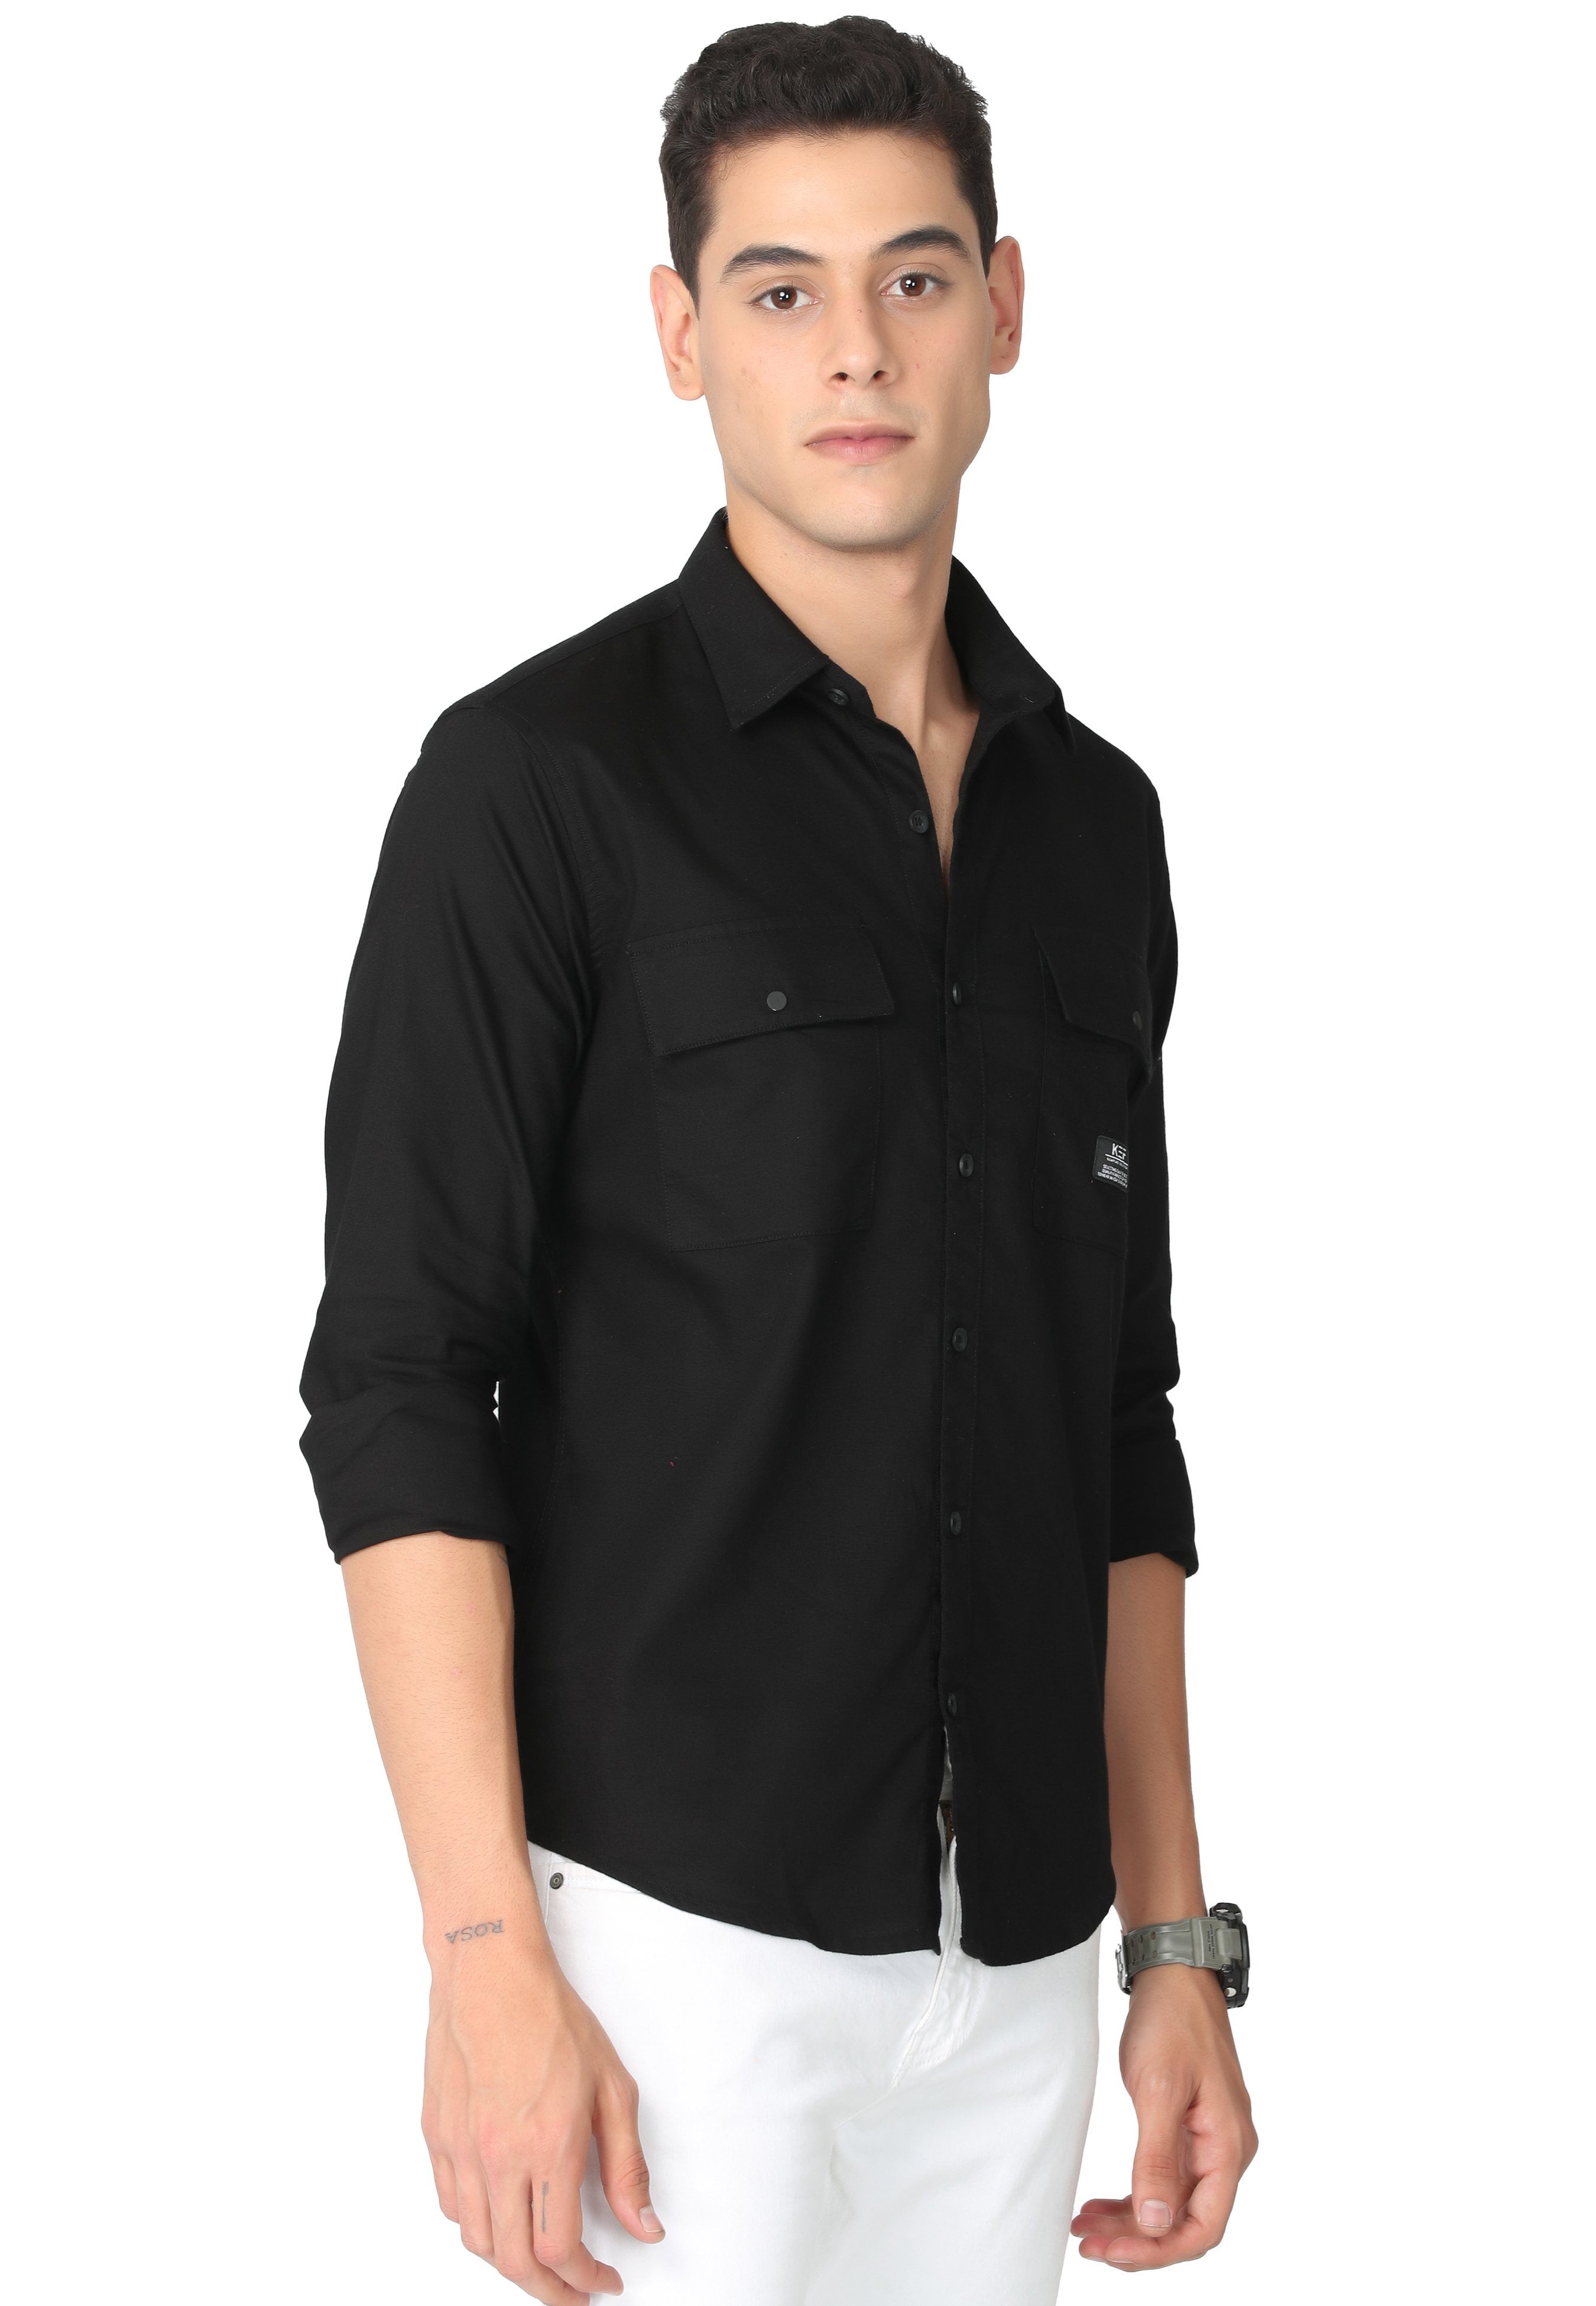 Pitch Black Double Pocket Shirt Shirts KEF 